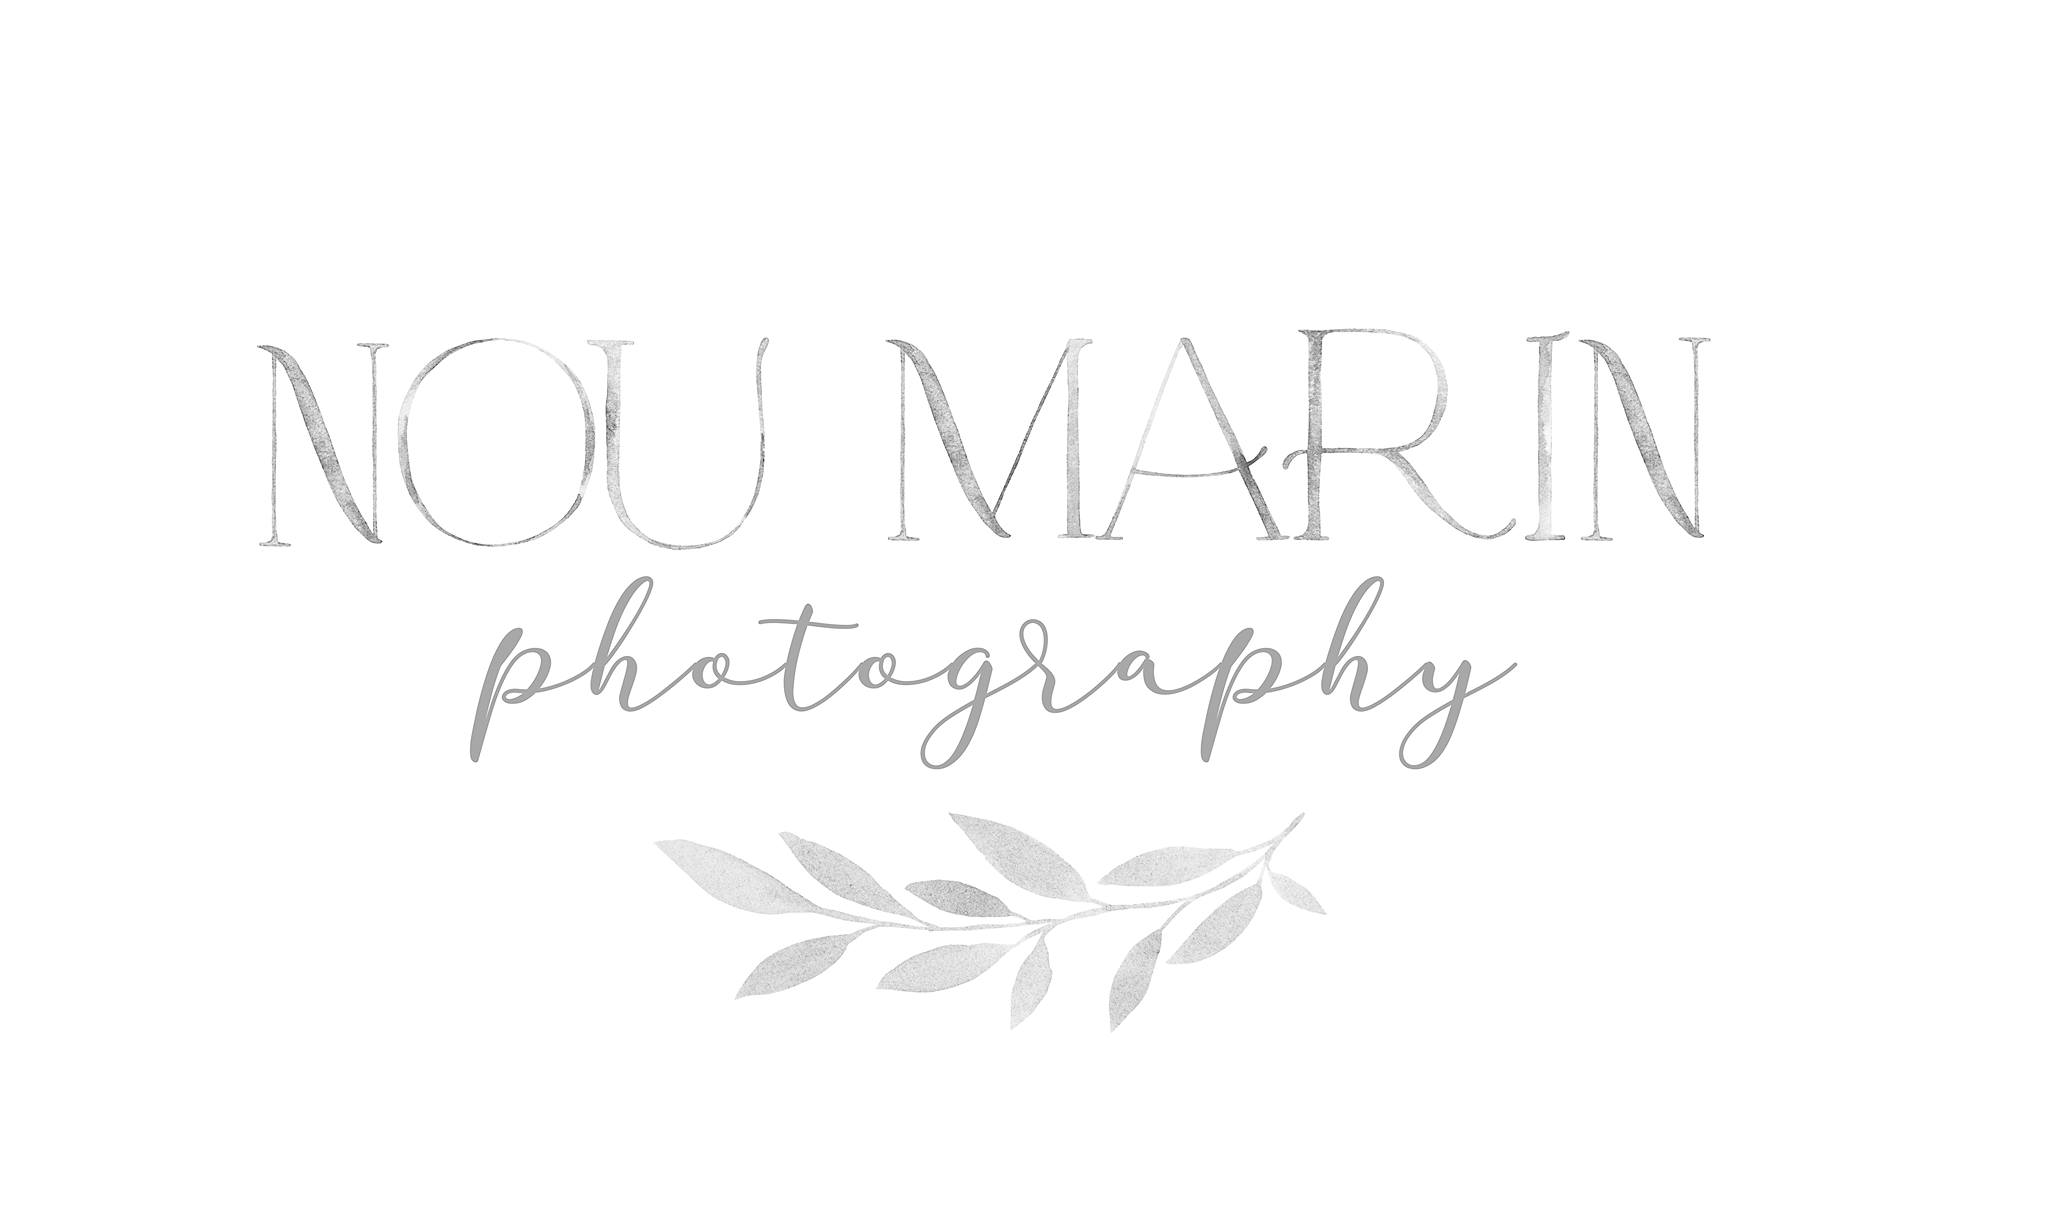 Nou Marin Photography